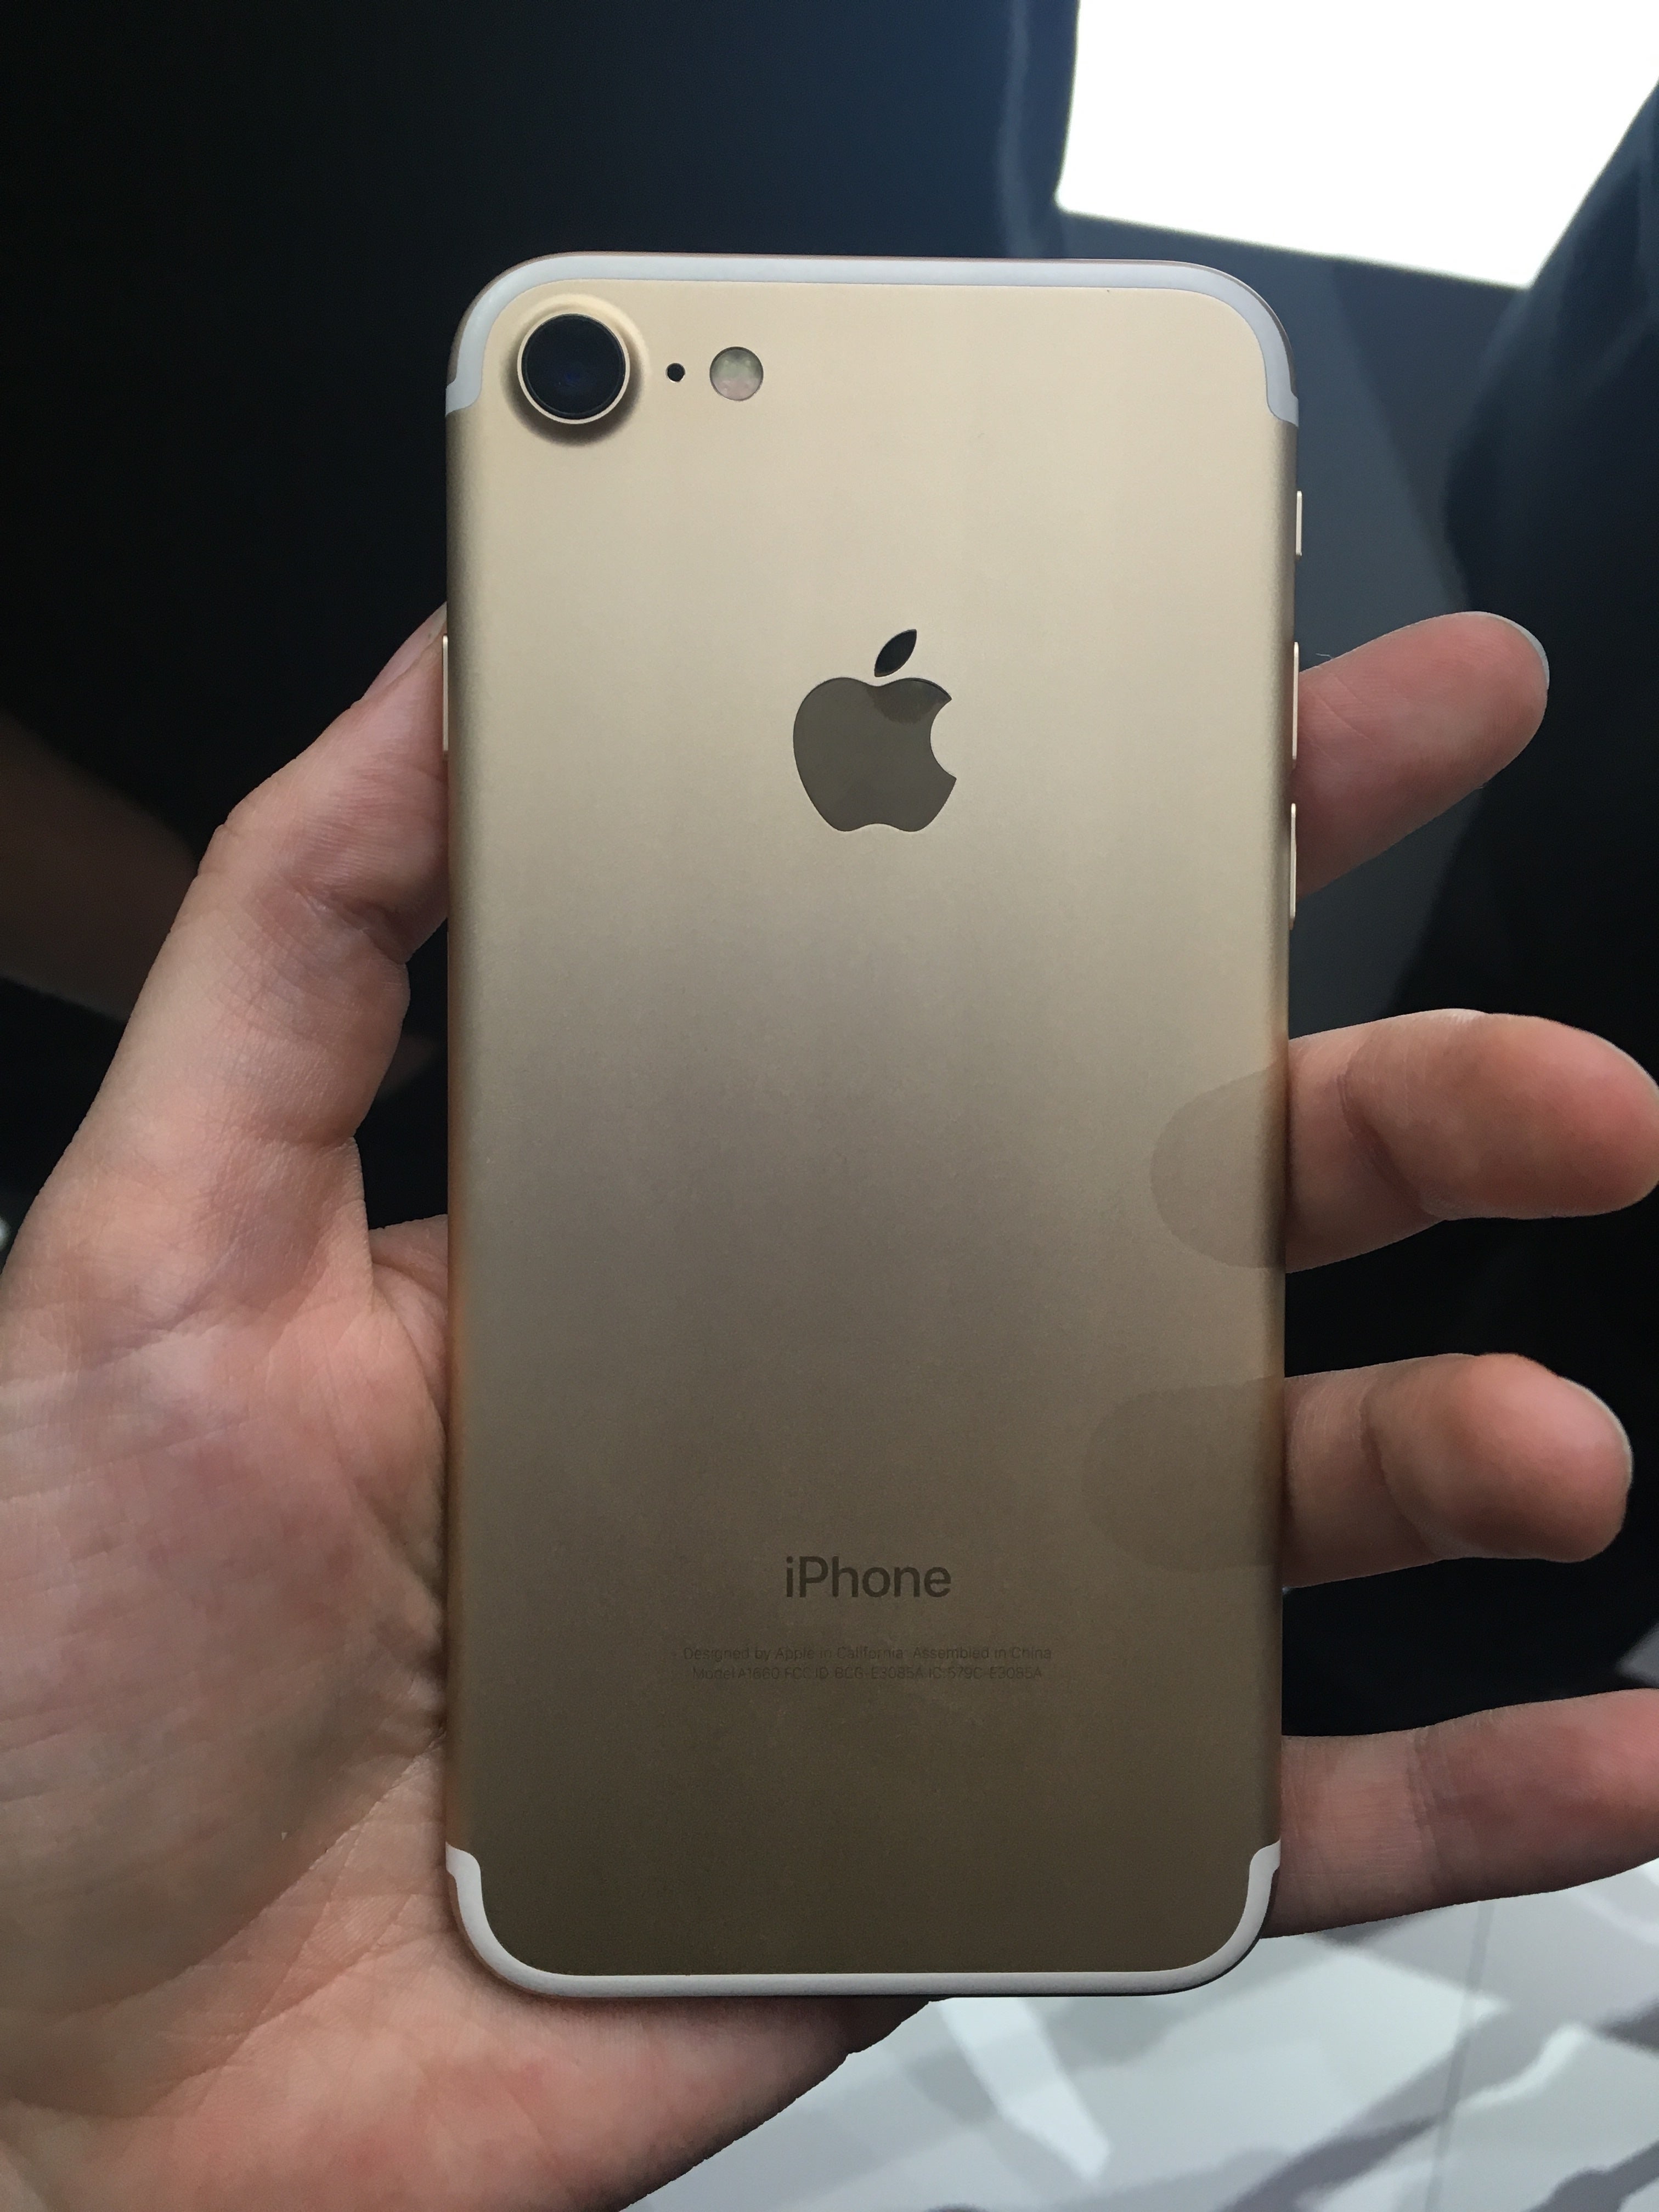 Apple 128GB iPhone 7 Plus Cell Phone - IPHONE7PLUSGLD128